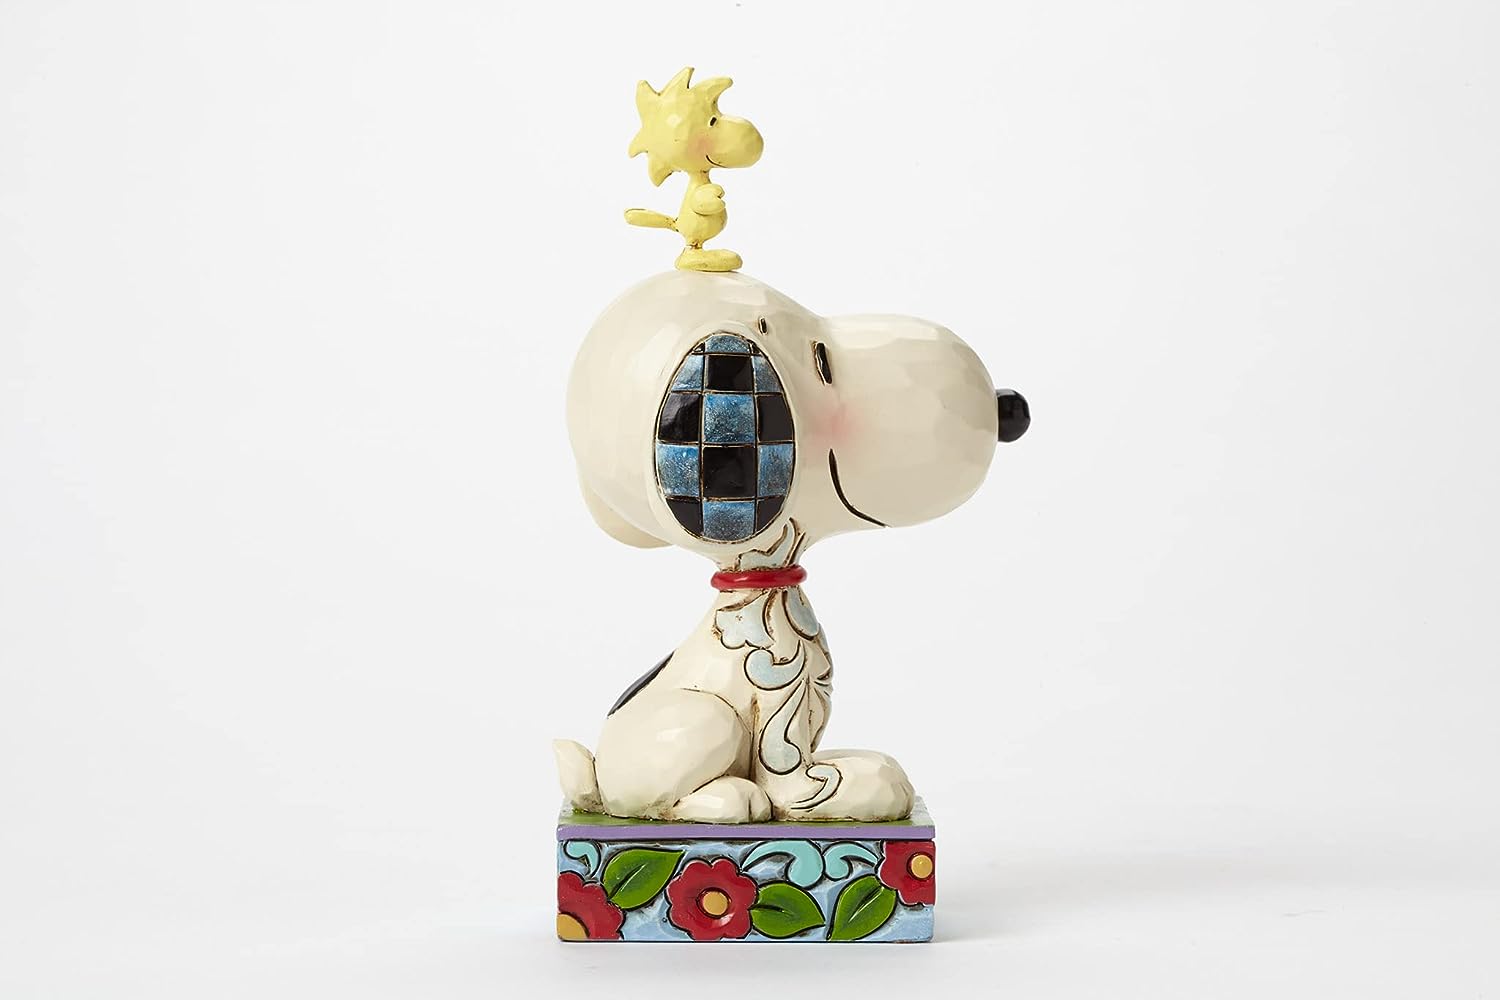 Peanuts Snoopy & Woodstock "My best Friend" - Jim Shore Figur